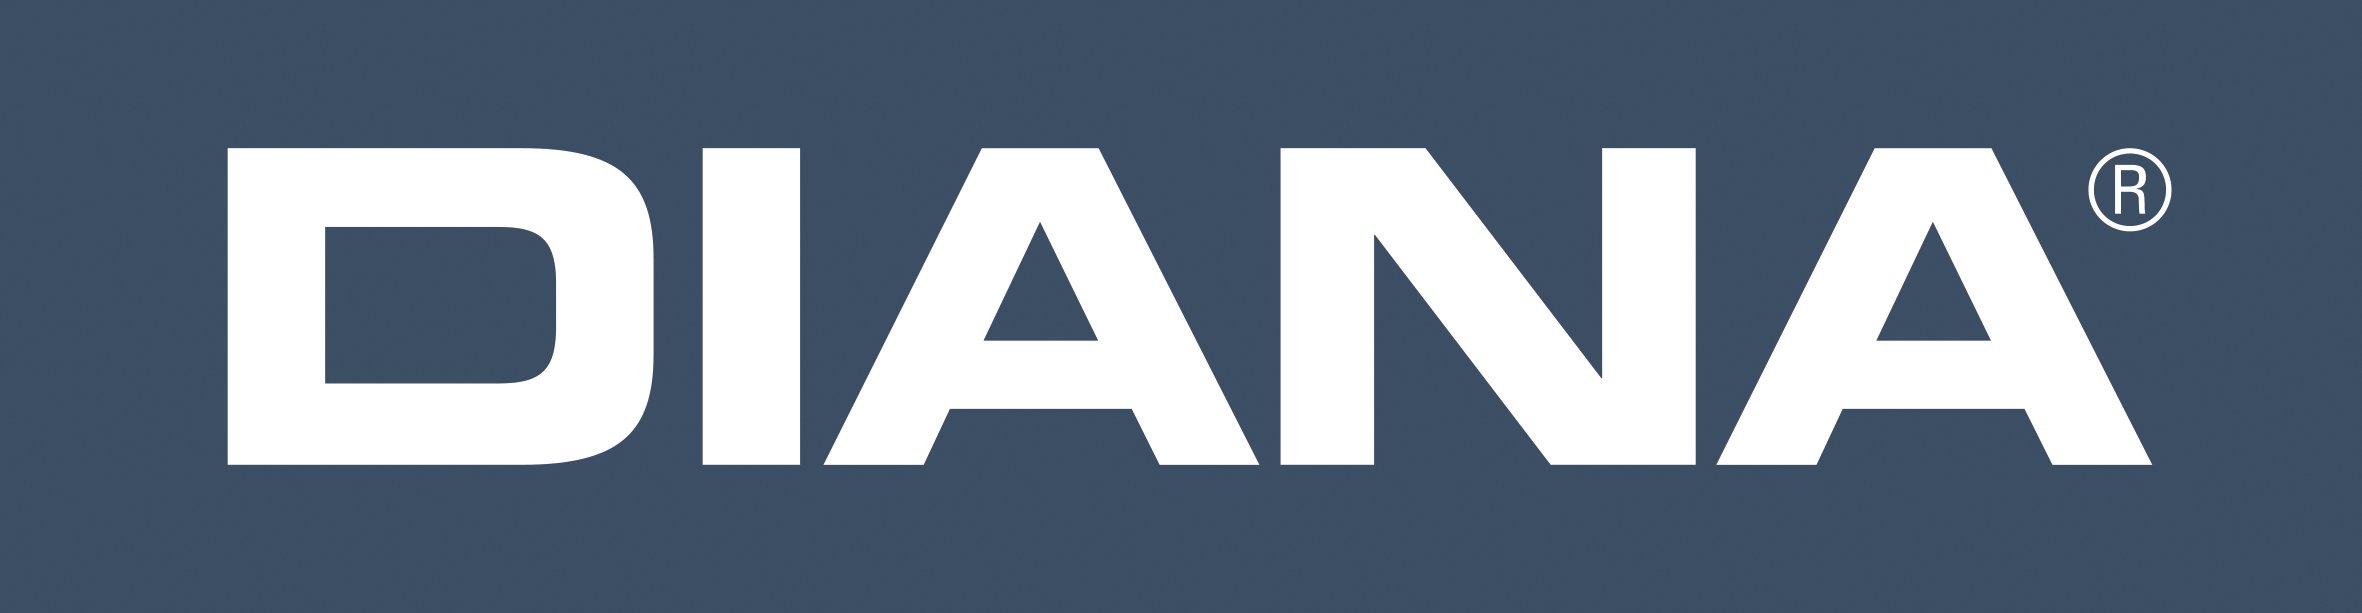 logo_DIANA